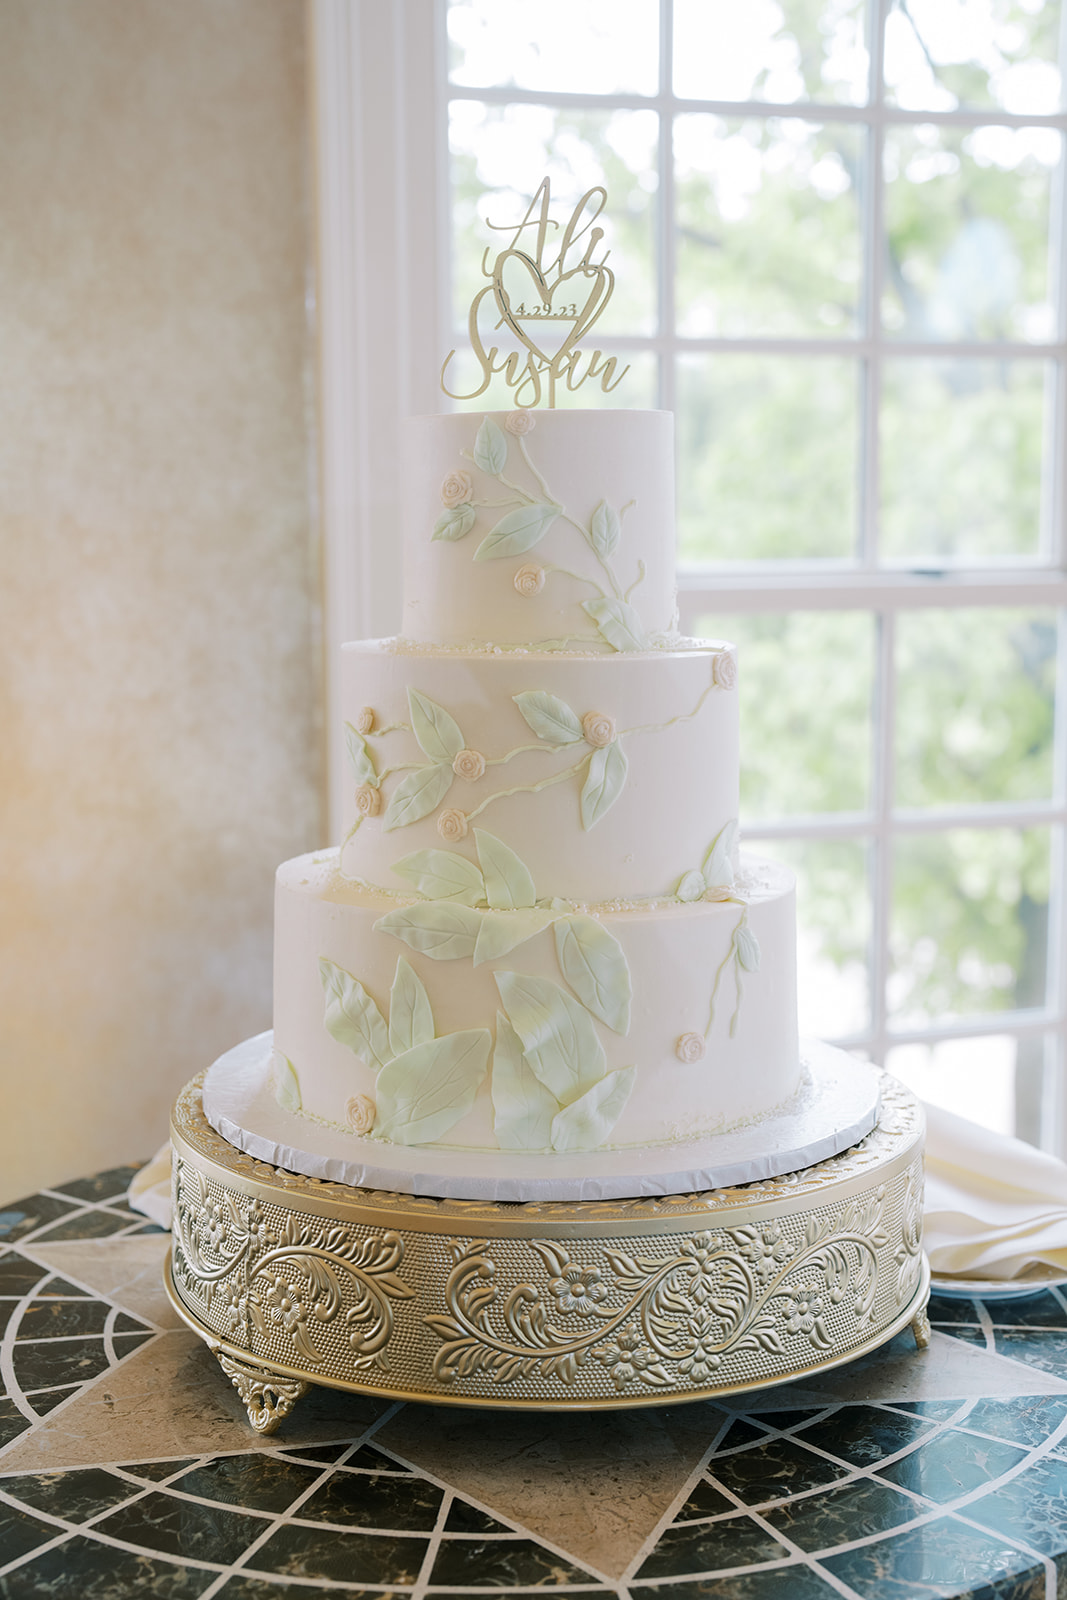 morais vineyard winery virginia bealeton wedding white wedding cake green leaves three tiered wedding cake roses on cake